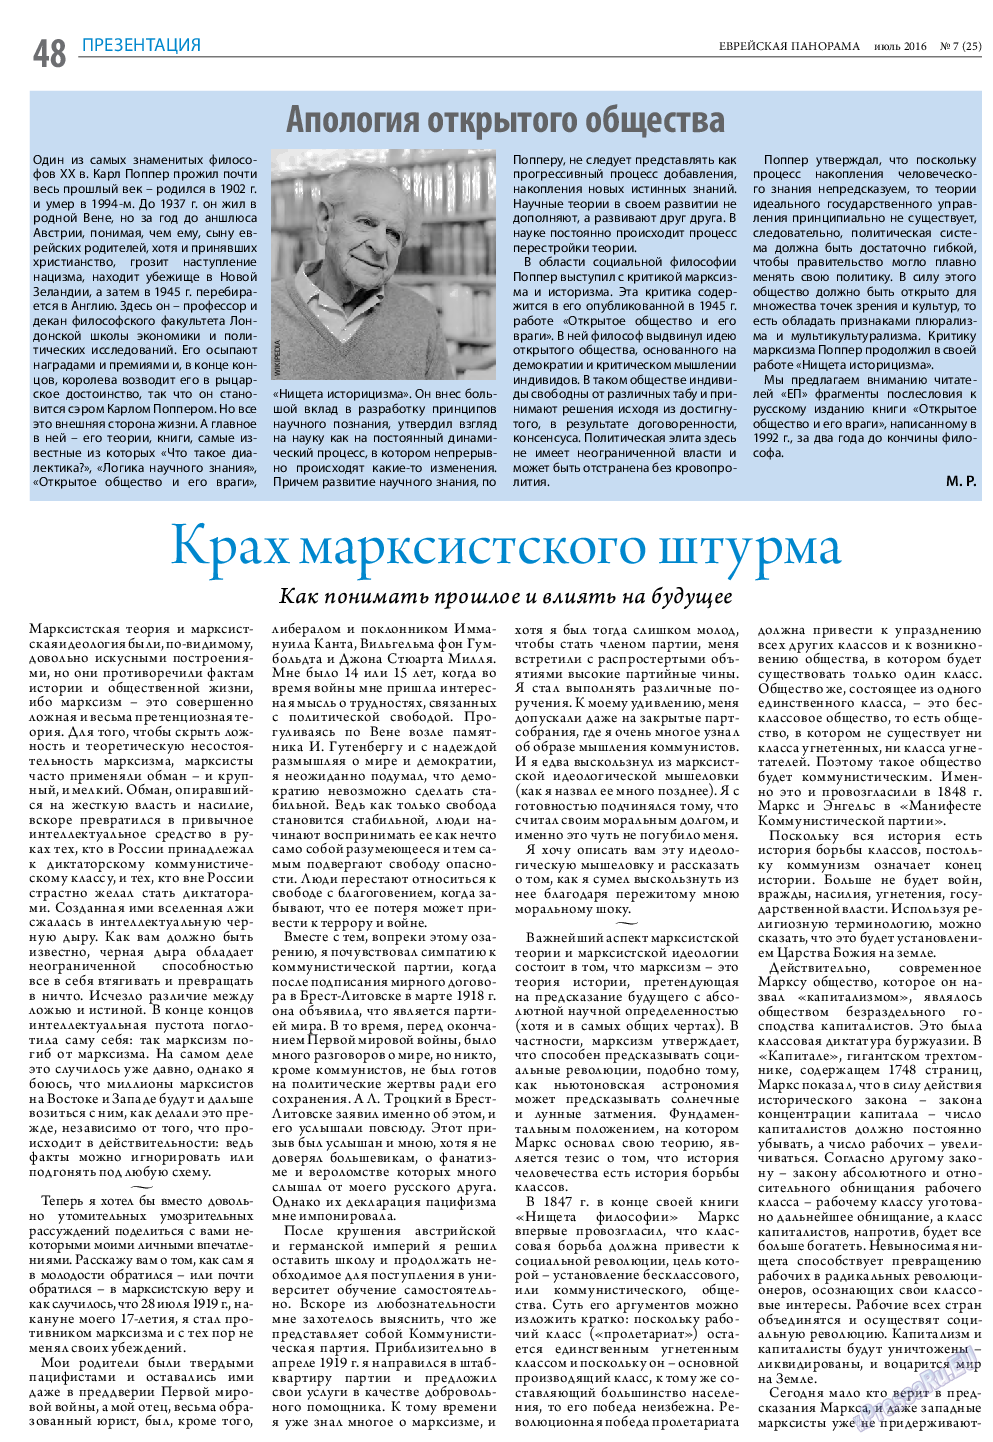 Еврейская панорама, газета. 2016 №7 стр.48